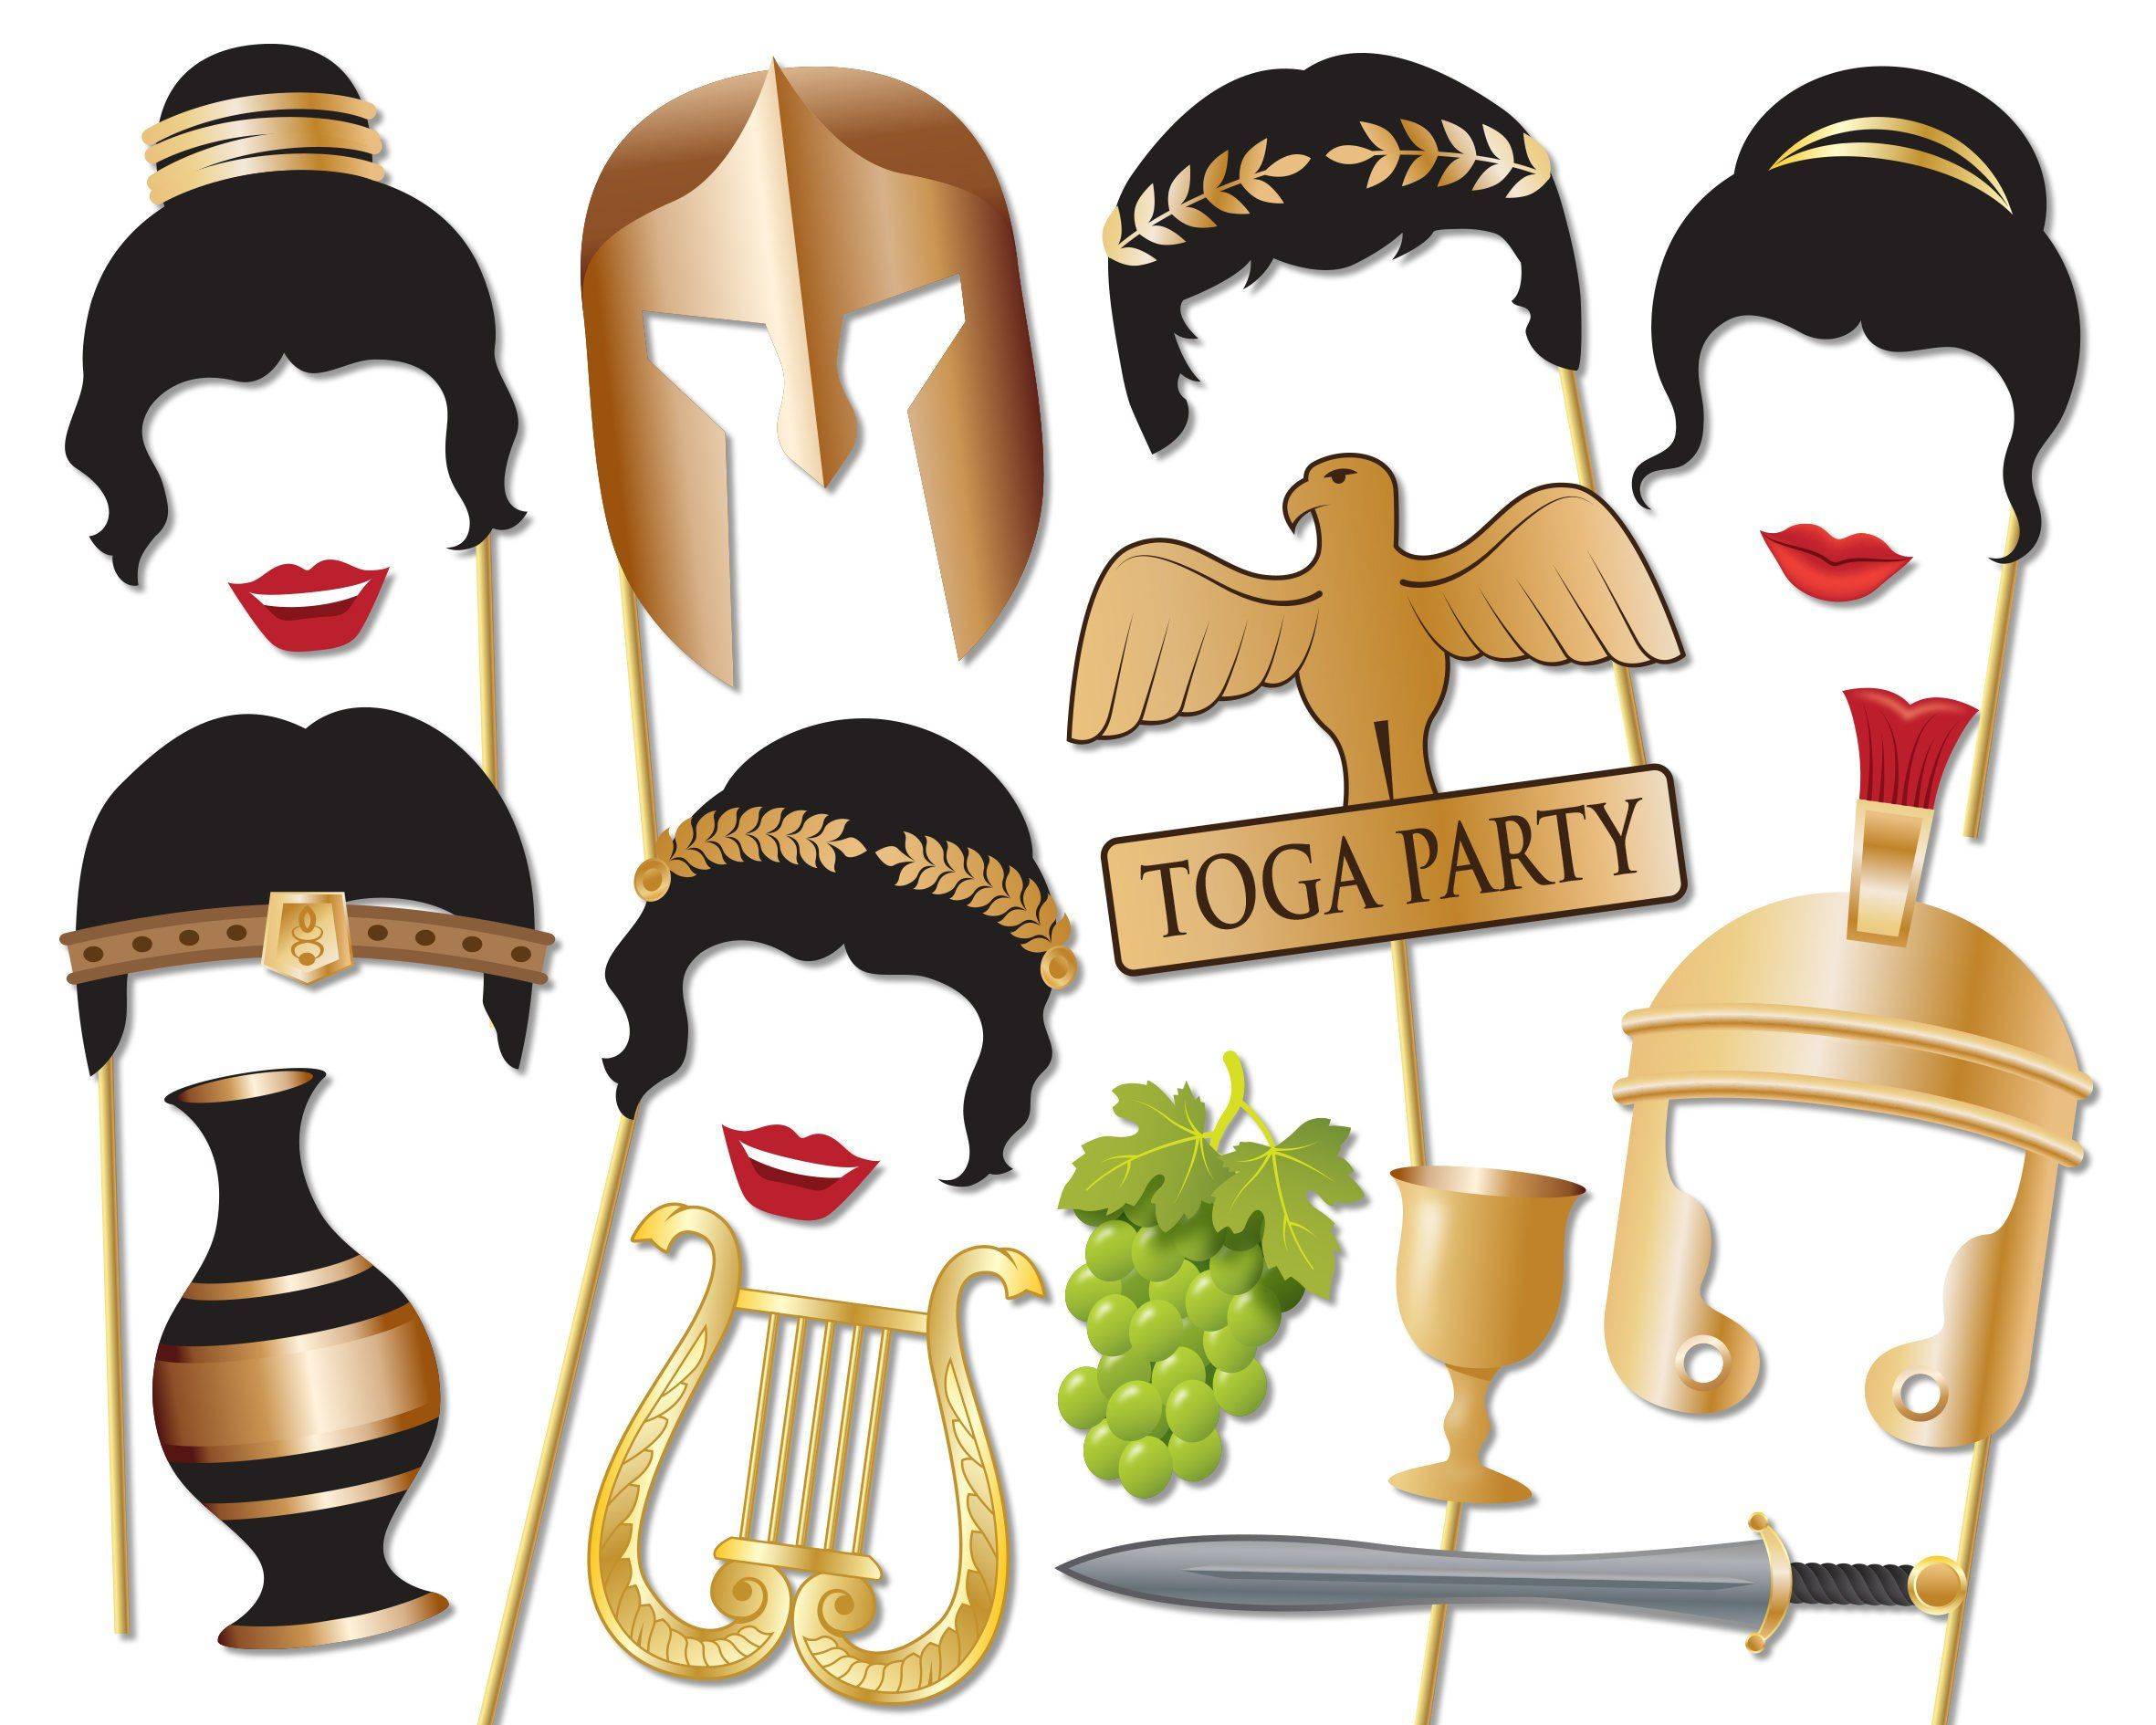 Ideas for toga parties: How Do I Throw a Toga Party? Food Ideas & More ...